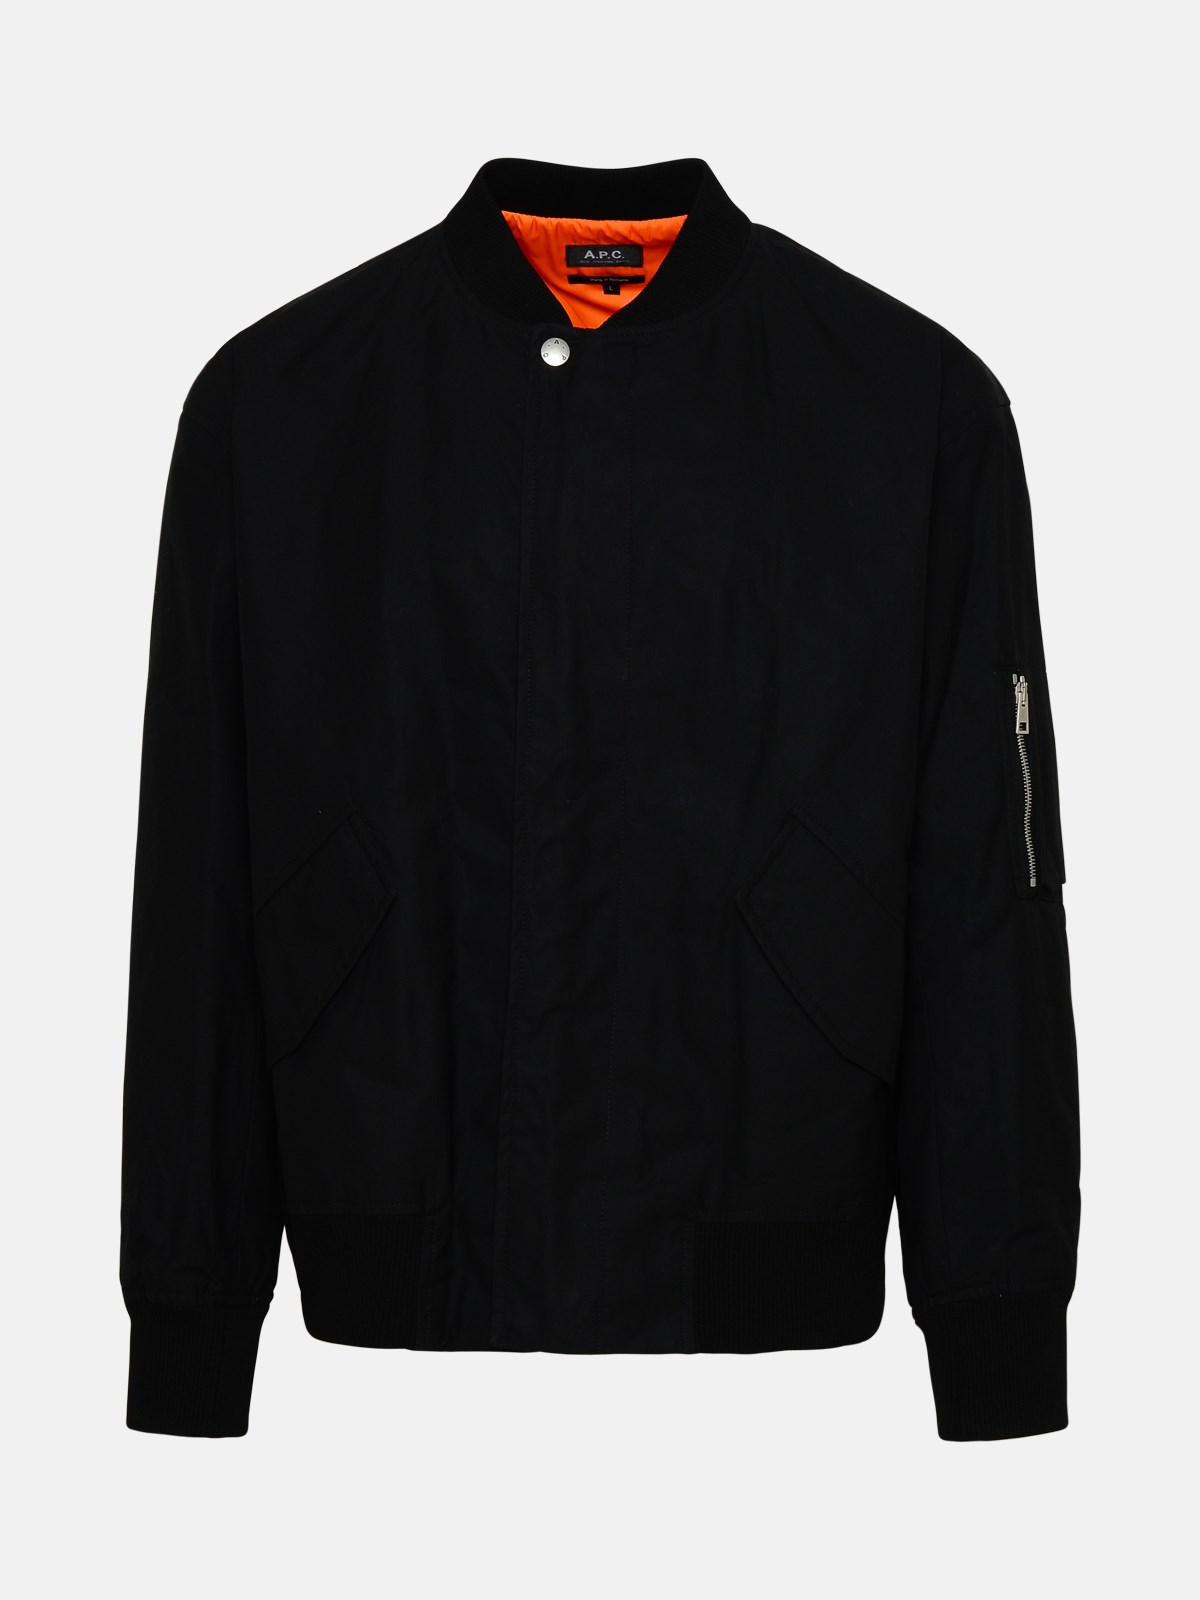 A.p.c. Hamilton Bomber Jacket In Black Cotton